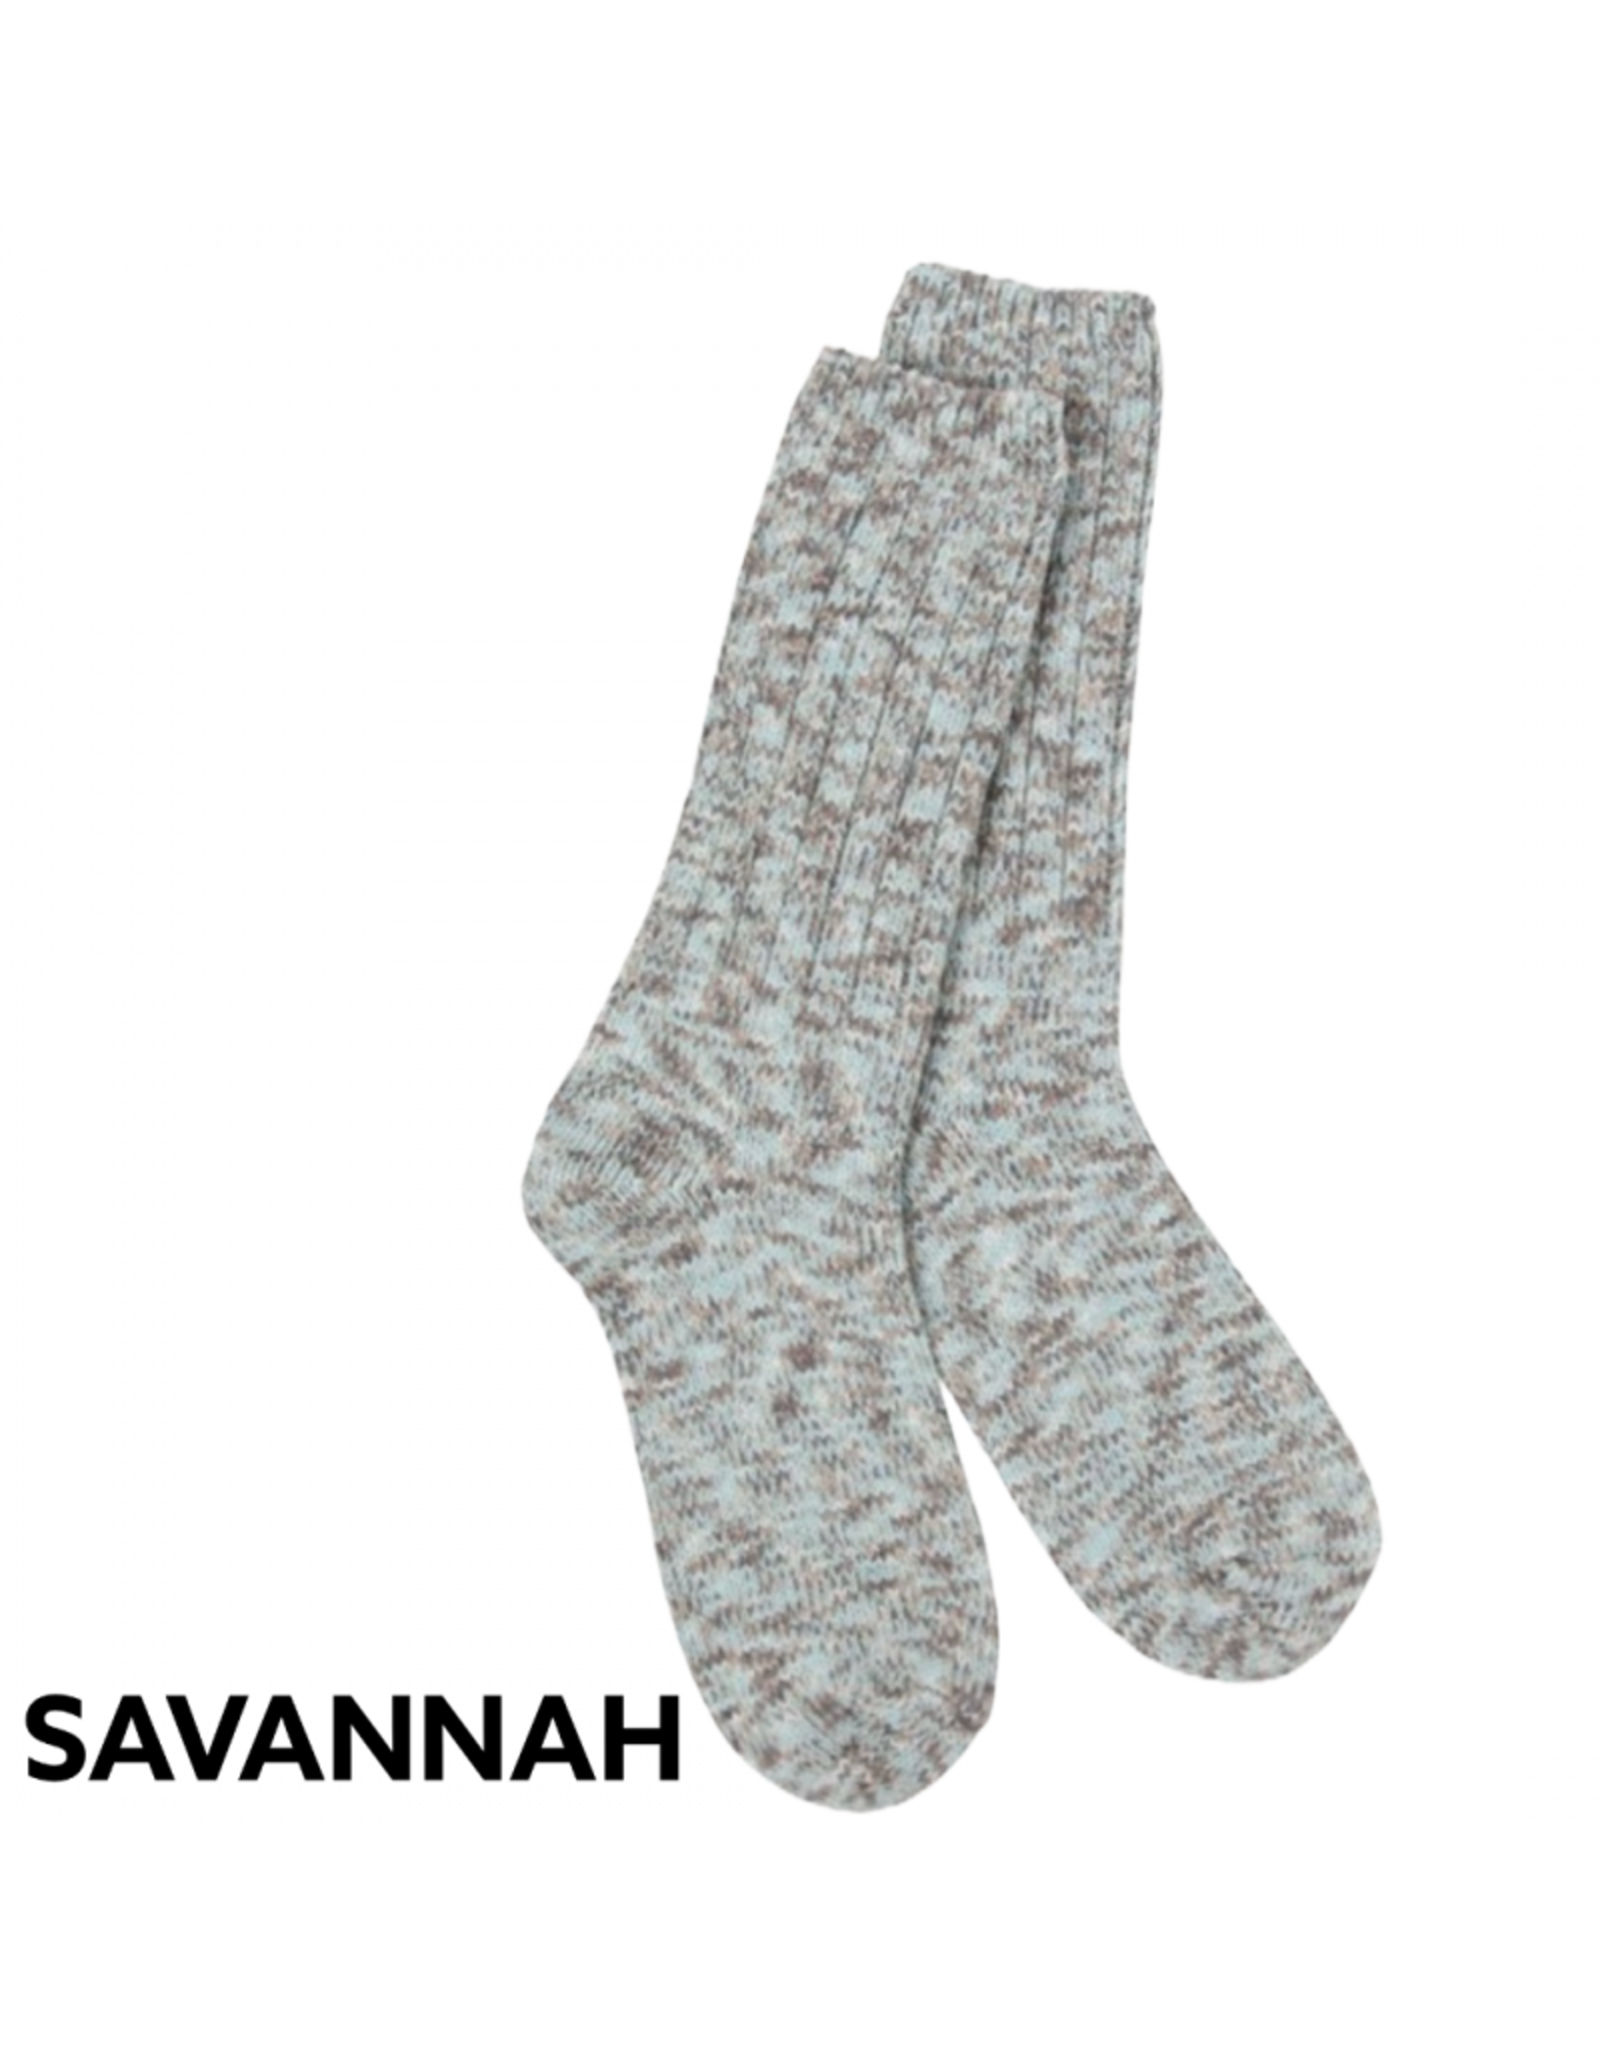 CRESCENT SOCK COMPANY World's Softest Socks